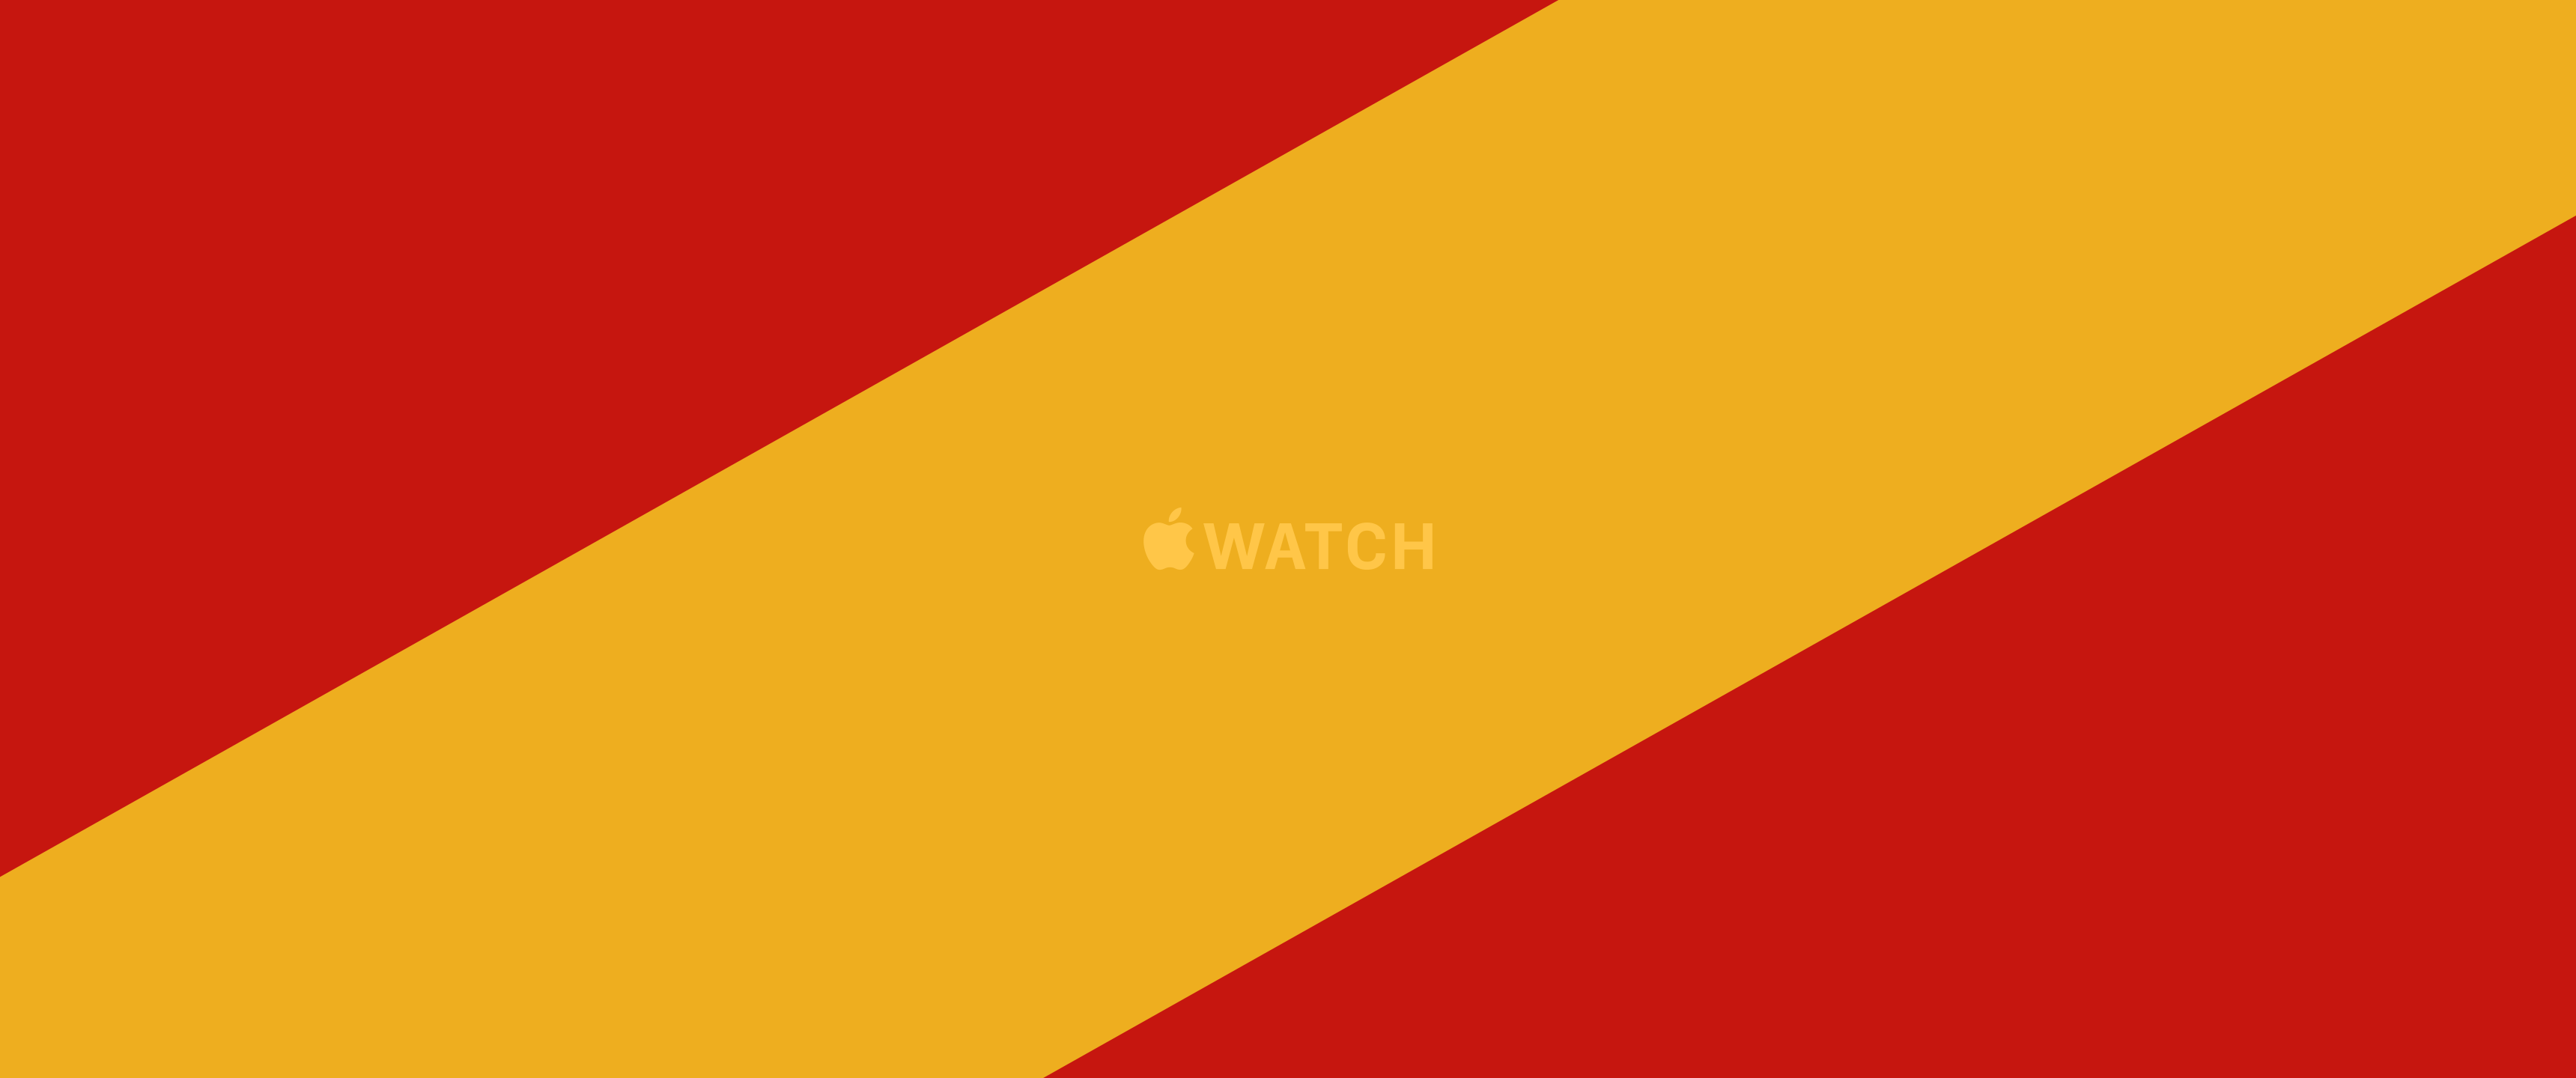 General 3440x1440 flag Spain Apple Inc. watch red yellow logo Apple Watch digital art ultrawide